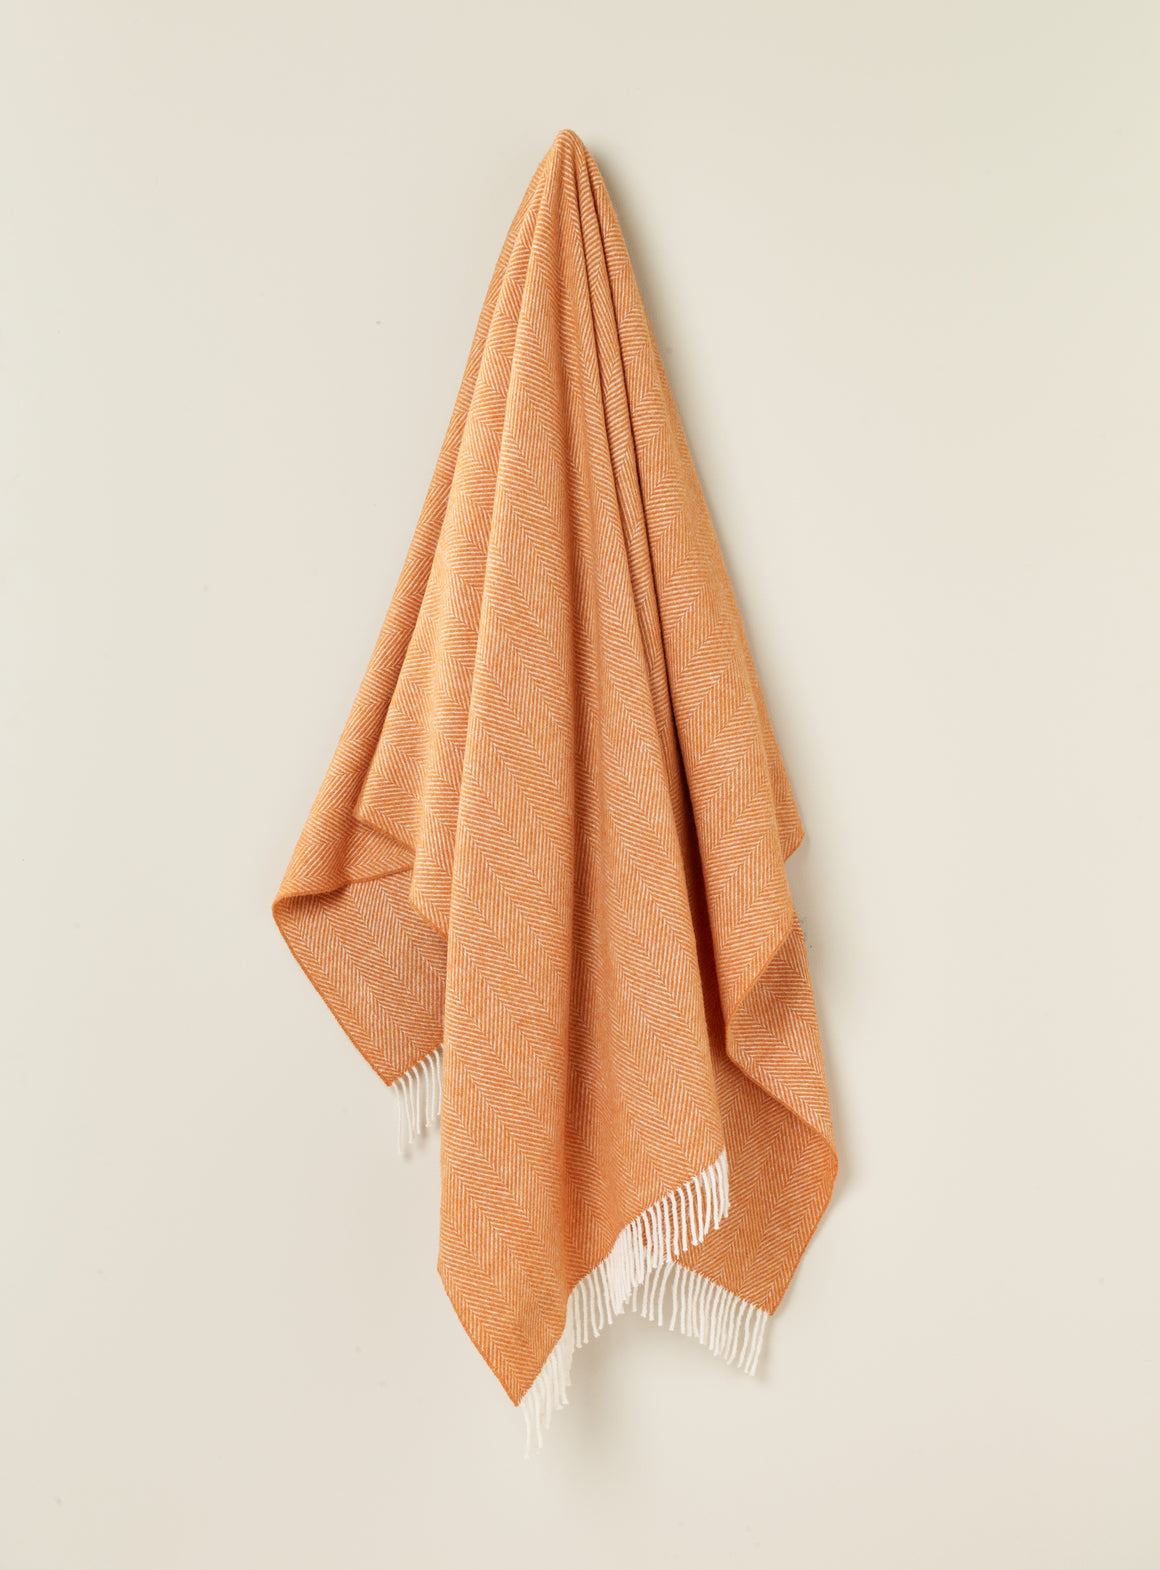 Merino Lambswool Throw Blanket - Herringbone - Saffron, Made in England